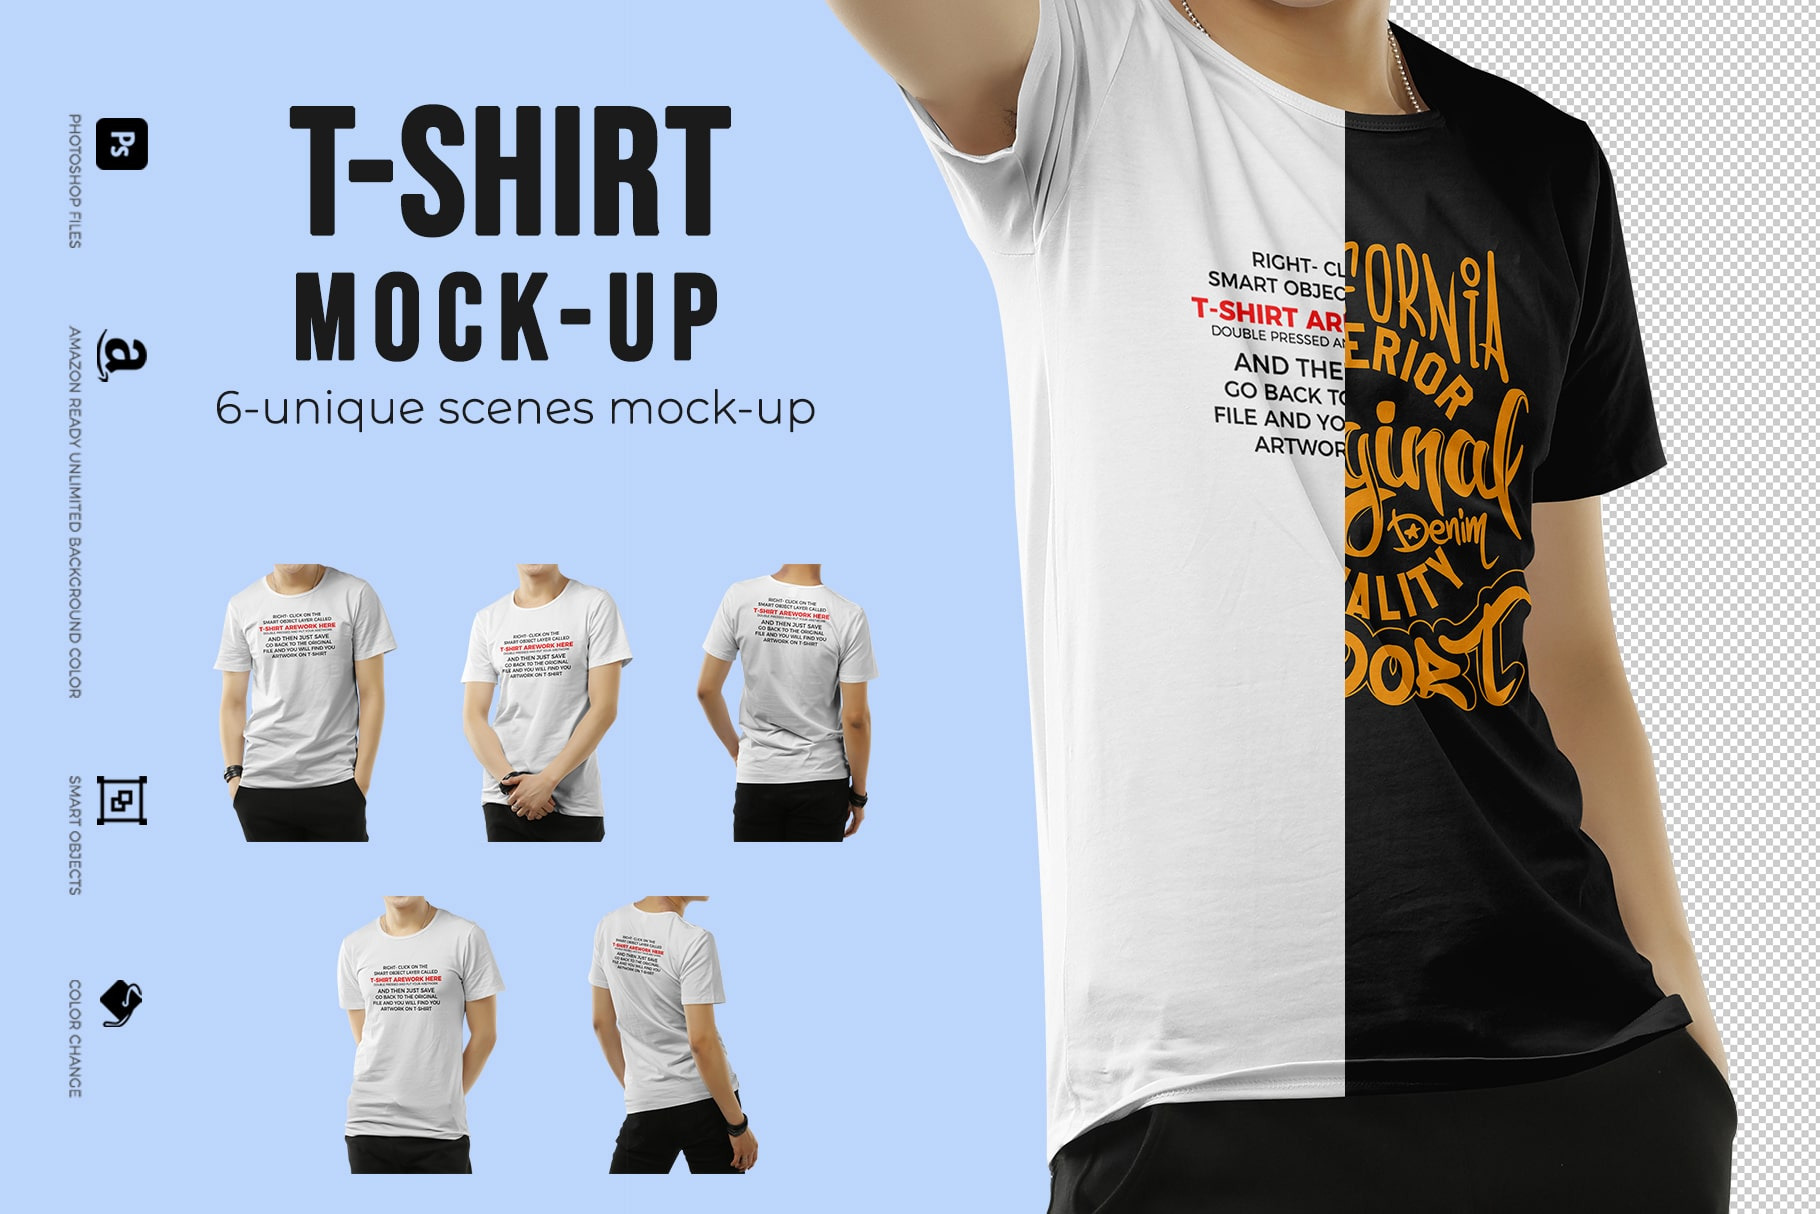 T-shirt Mock-up, a Shirt Mockup by Mock-up Store